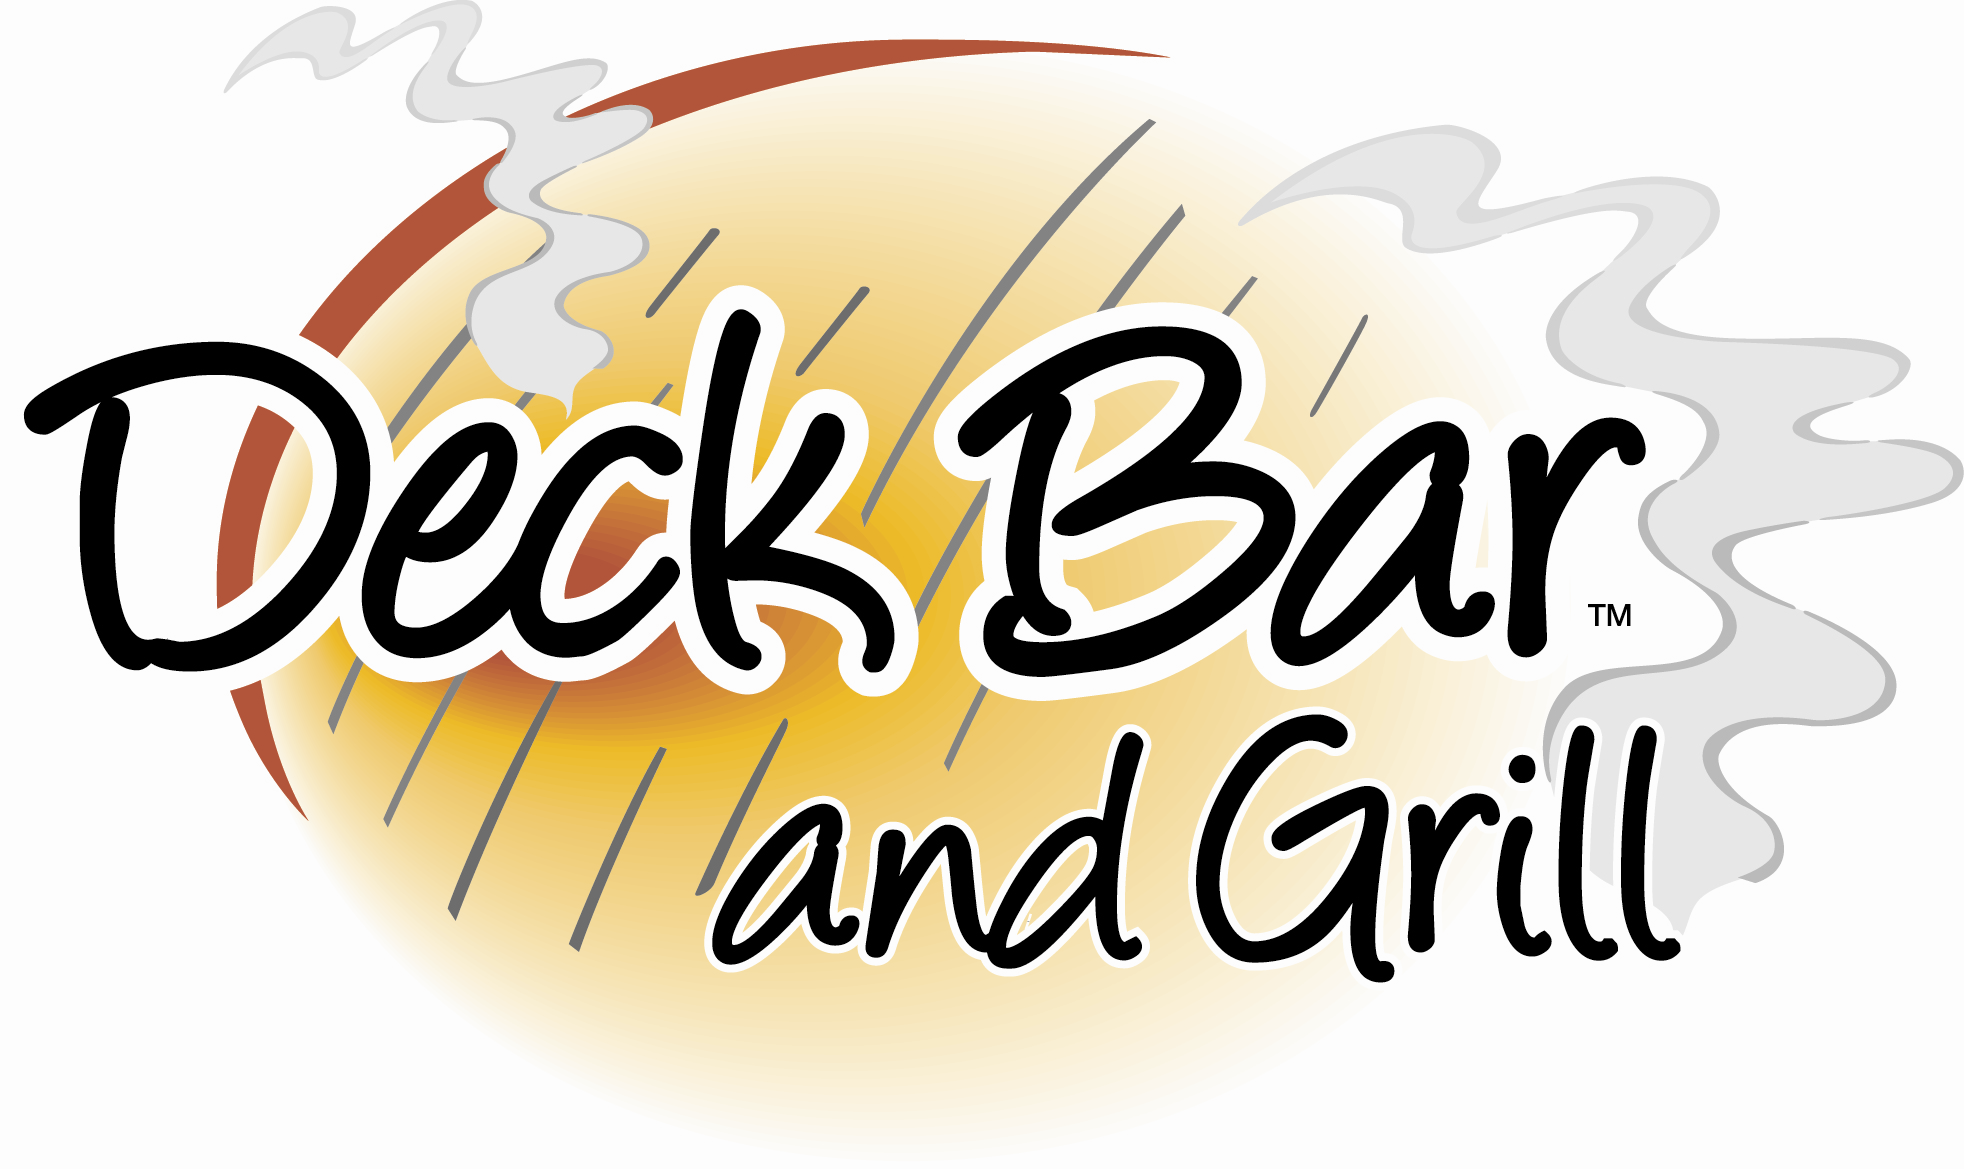 deck bar logo